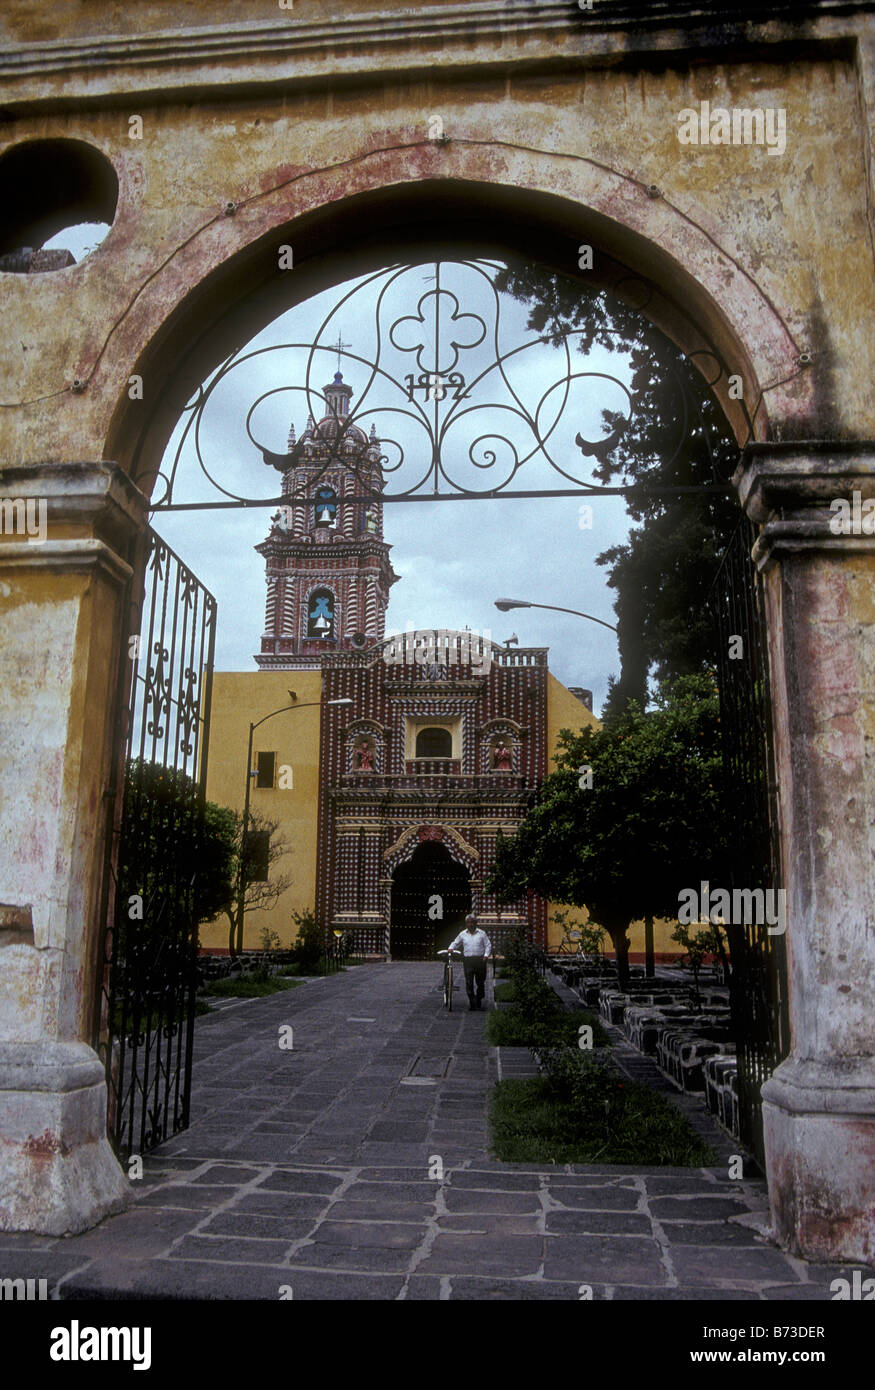 The Templo de Santa Maria church in the village of Tonantzintla, Puebla state, Mexico Stock Photo